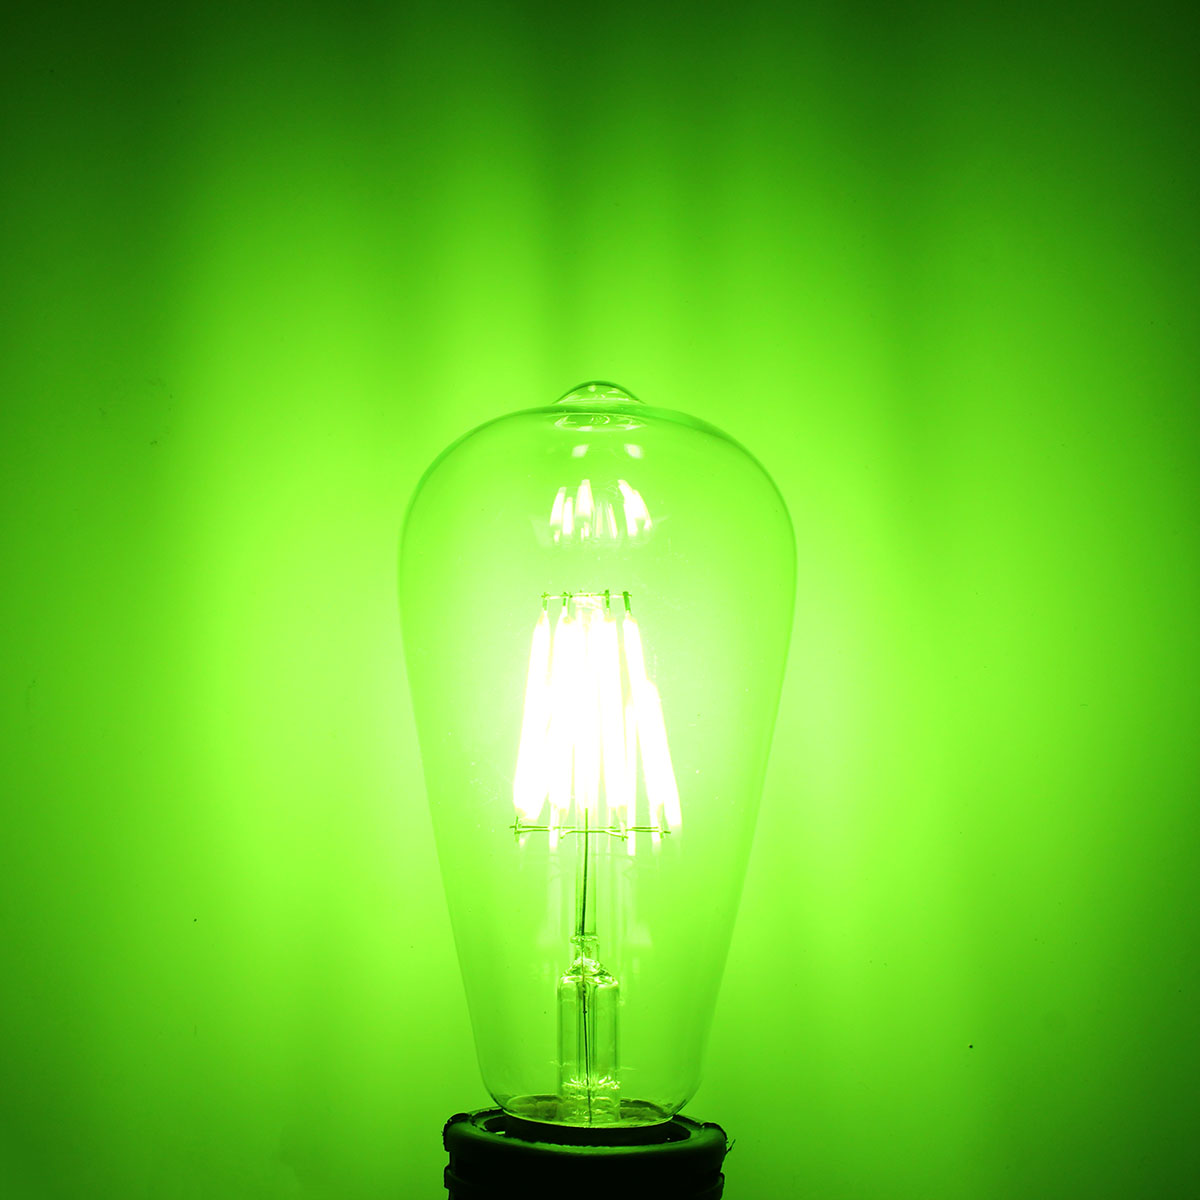 E27-ST64-8W-RGB-Edison-Rereo-Glass-800Lm-Vintage-Incandescent-Light-Lamp-Bulb-AC220V-1070557